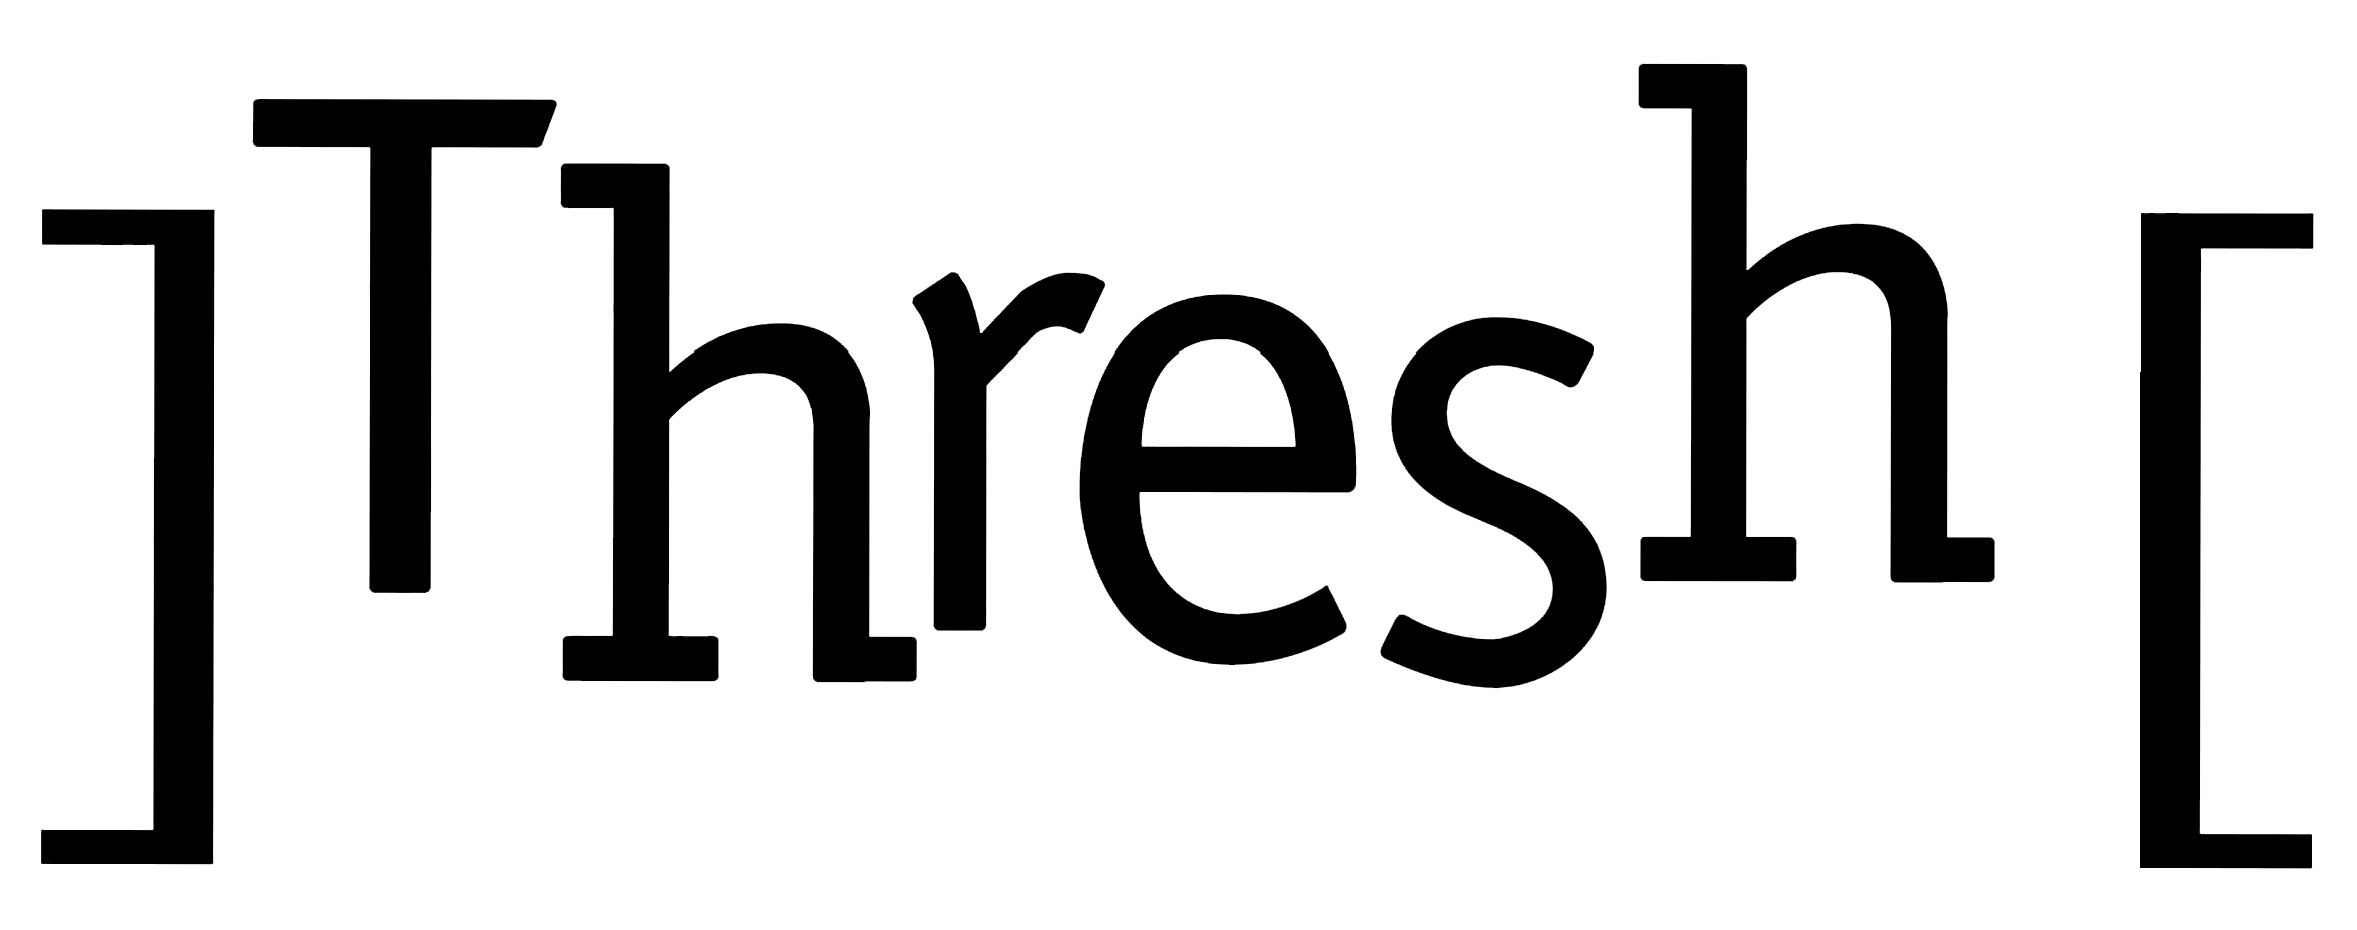 Thresh logo